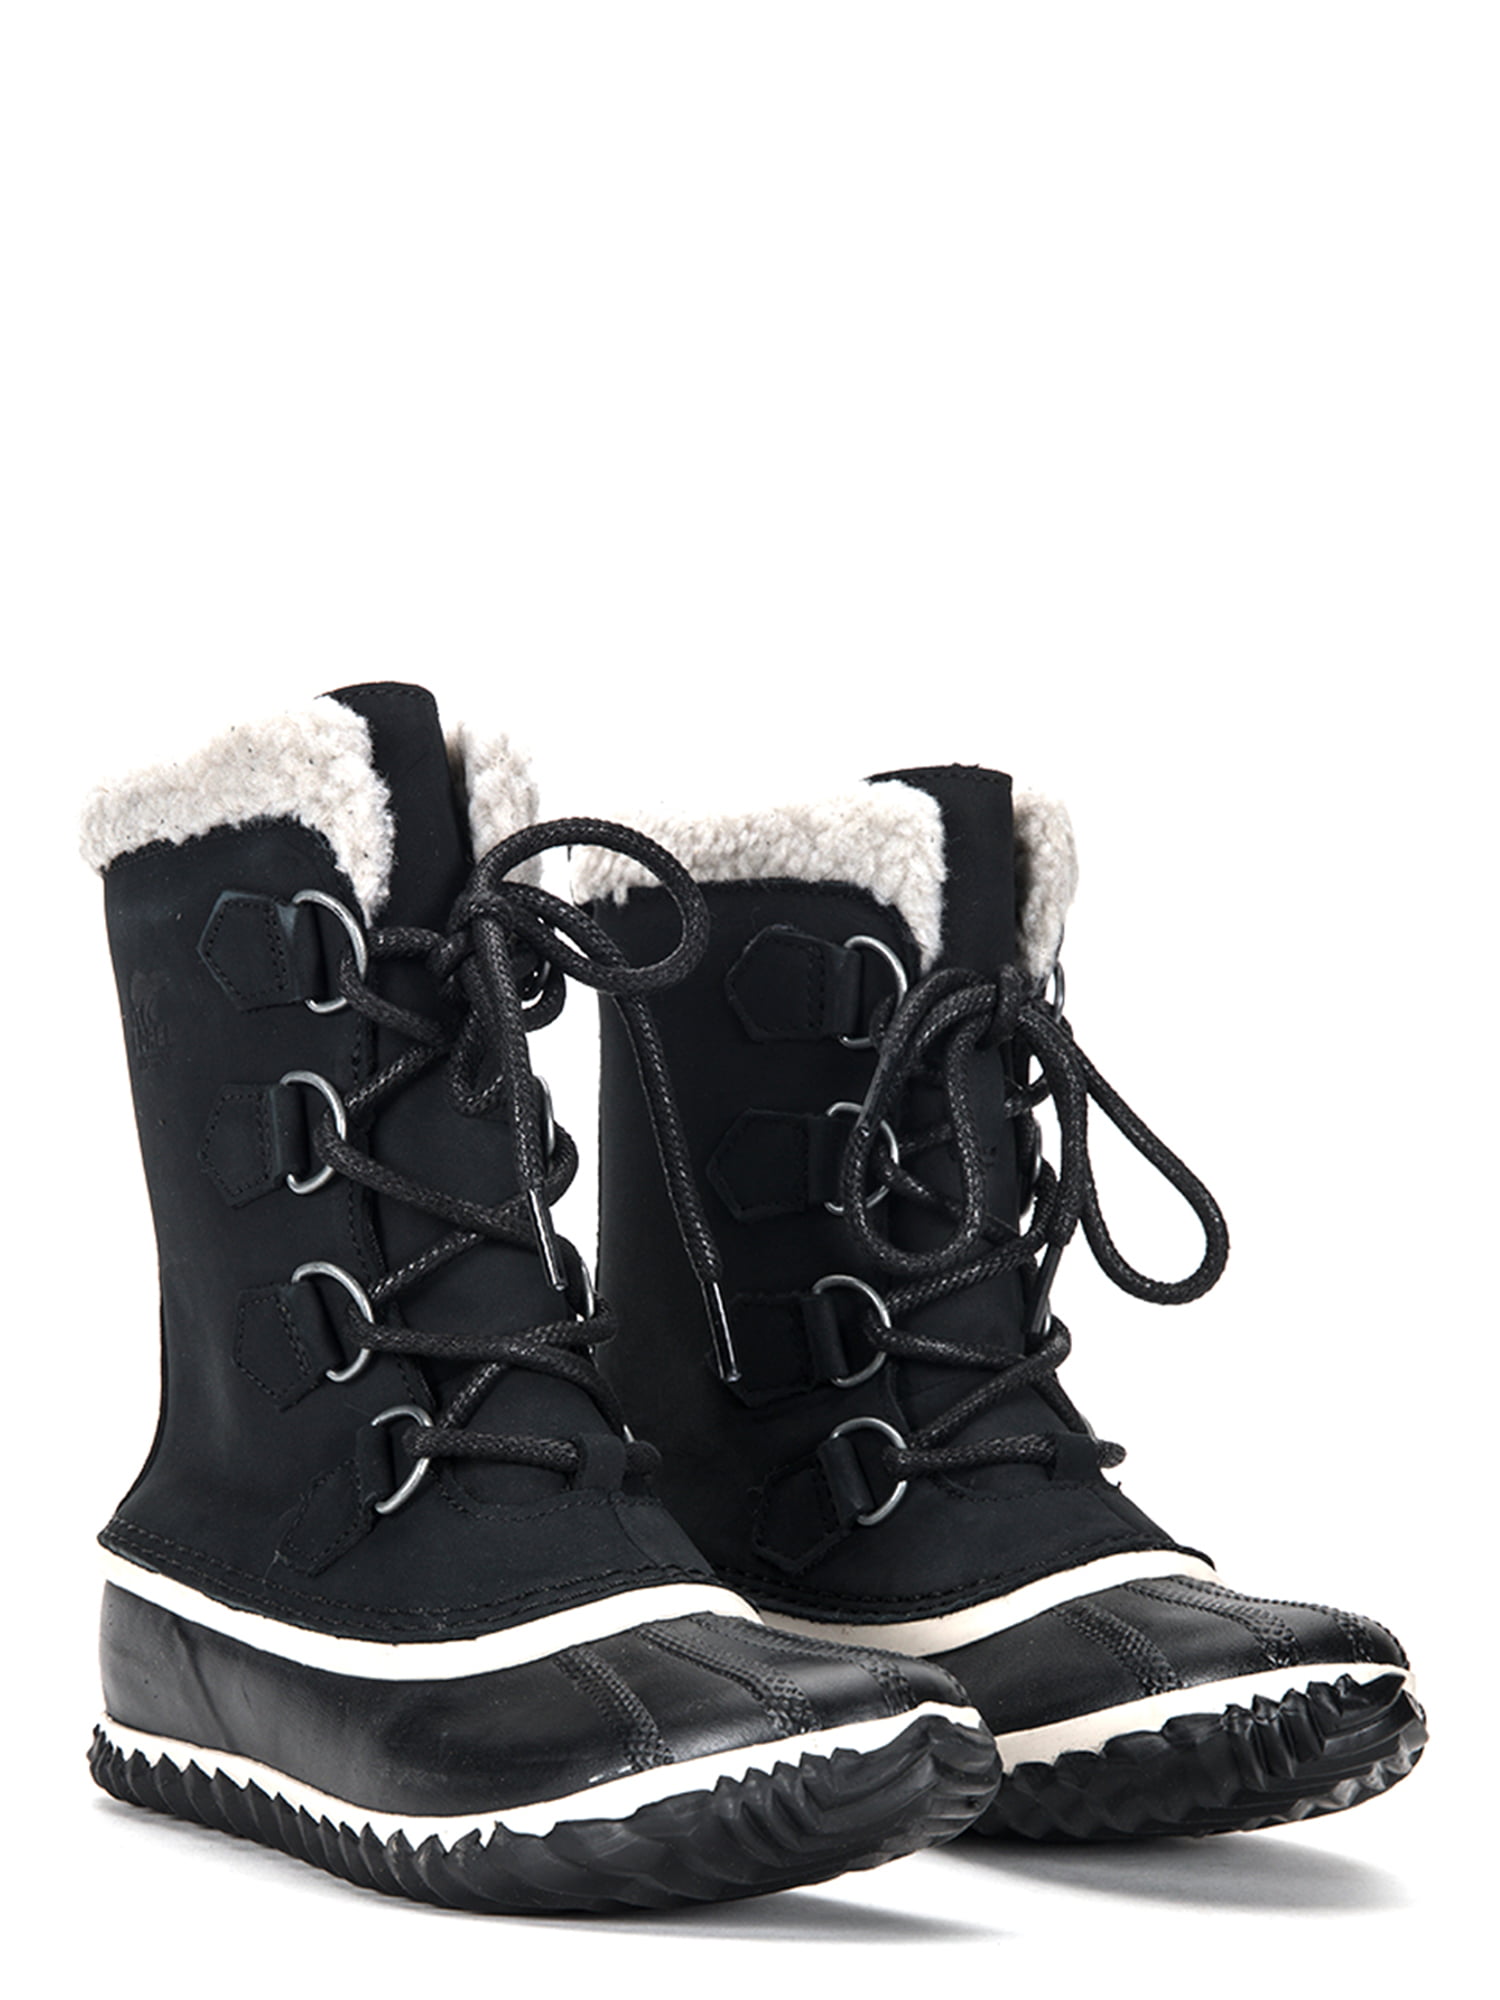 Sorel Caribou Slim Snow Boots 